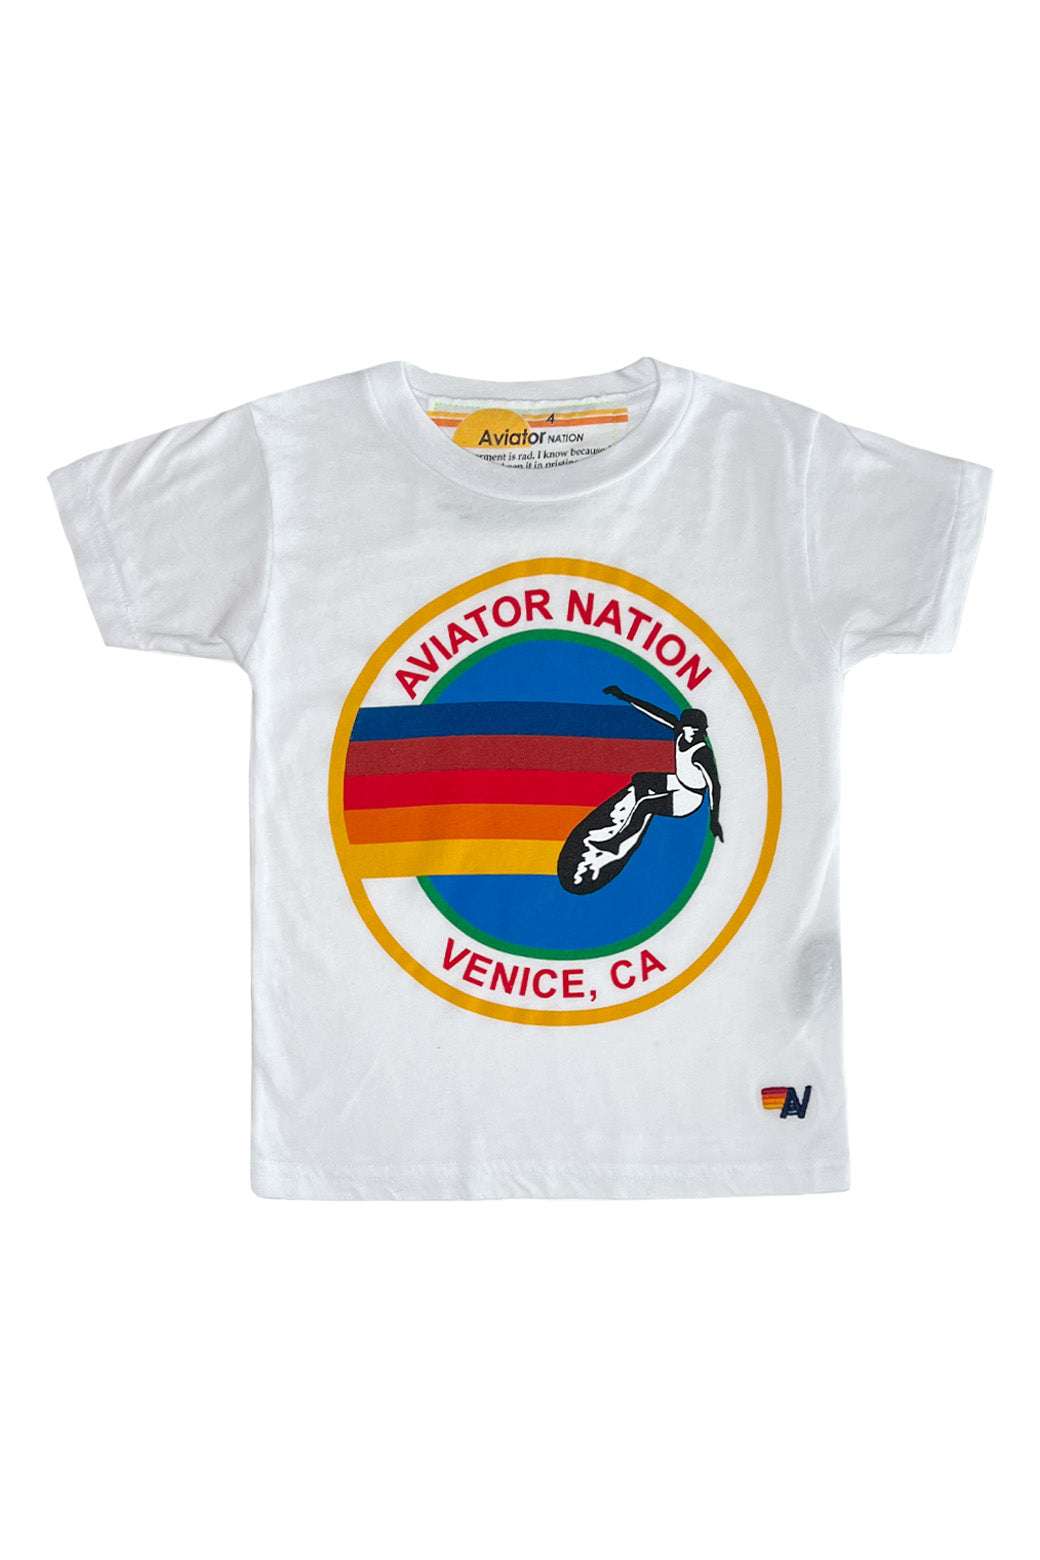 KID'S AVIATOR NATION TEE - WHITE Kid's Tee Aviator Nation 